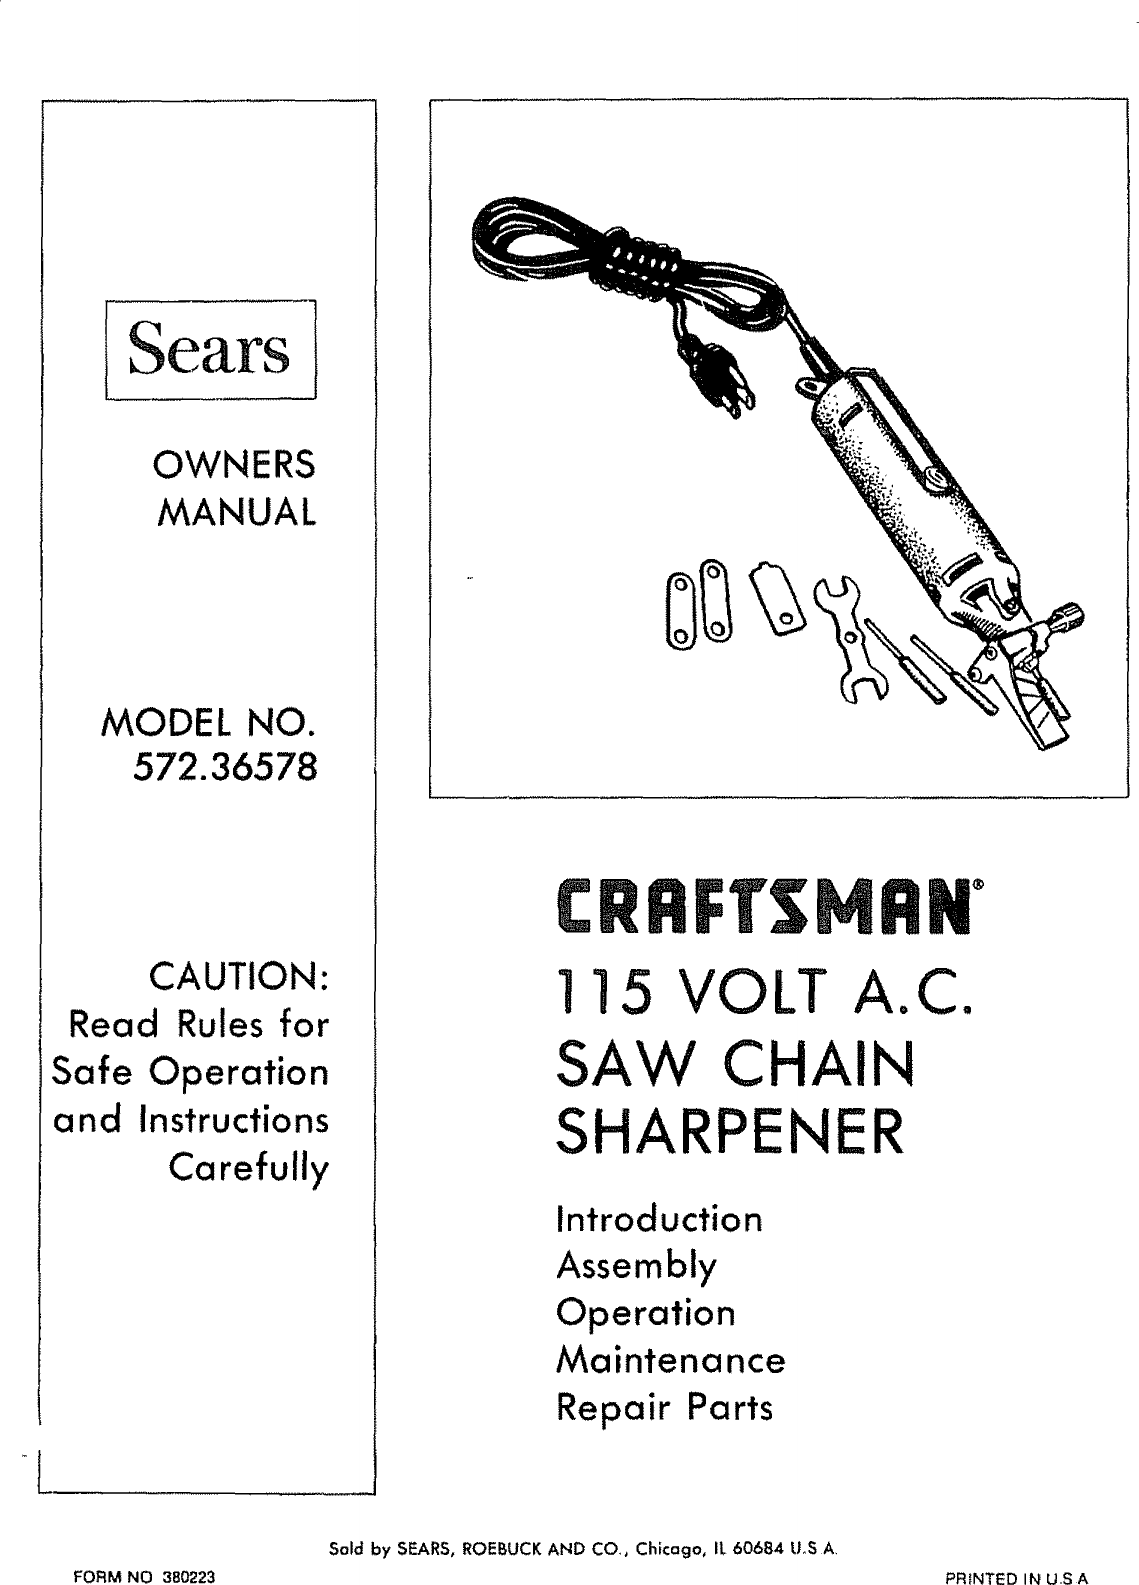 Craftsman 57236578 User Manual SAW CHAIN SHARPENER Manuals And ...